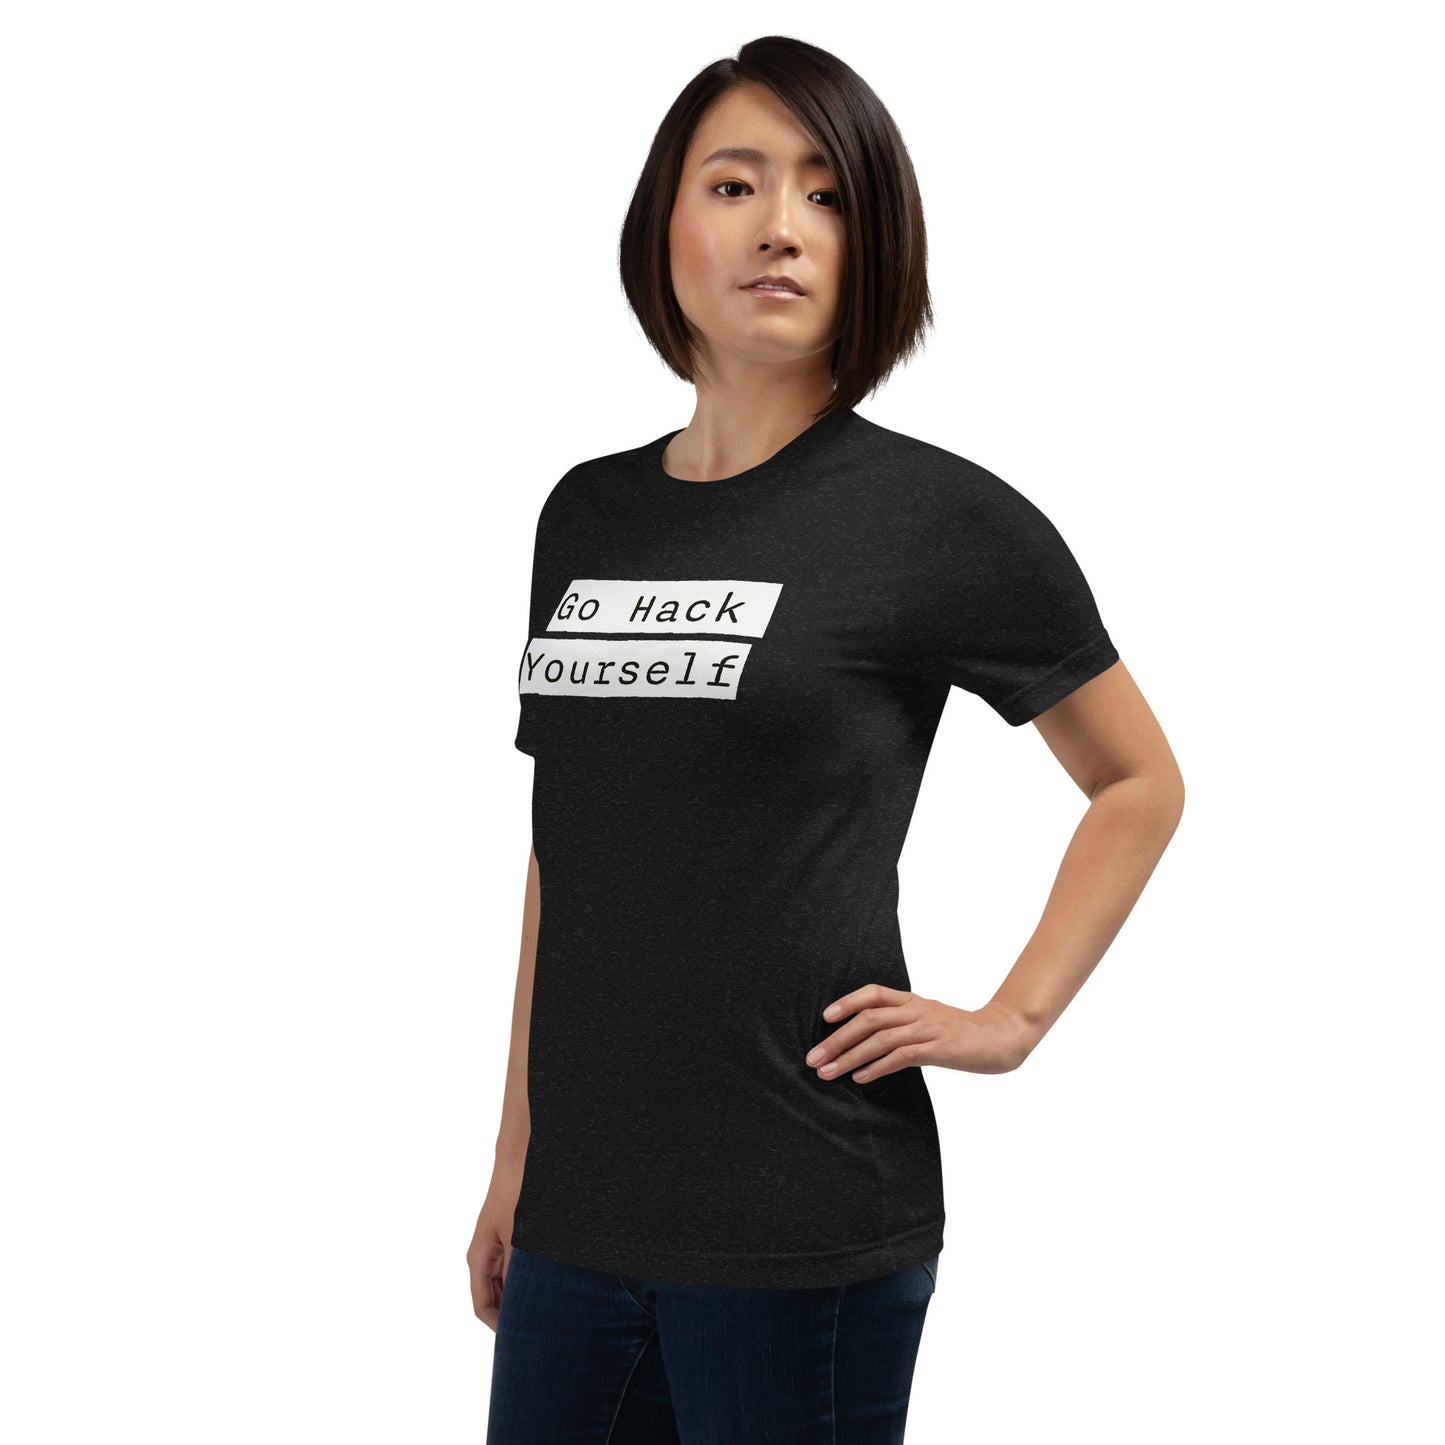 Go Hack Yourself - Unisex t-shirt